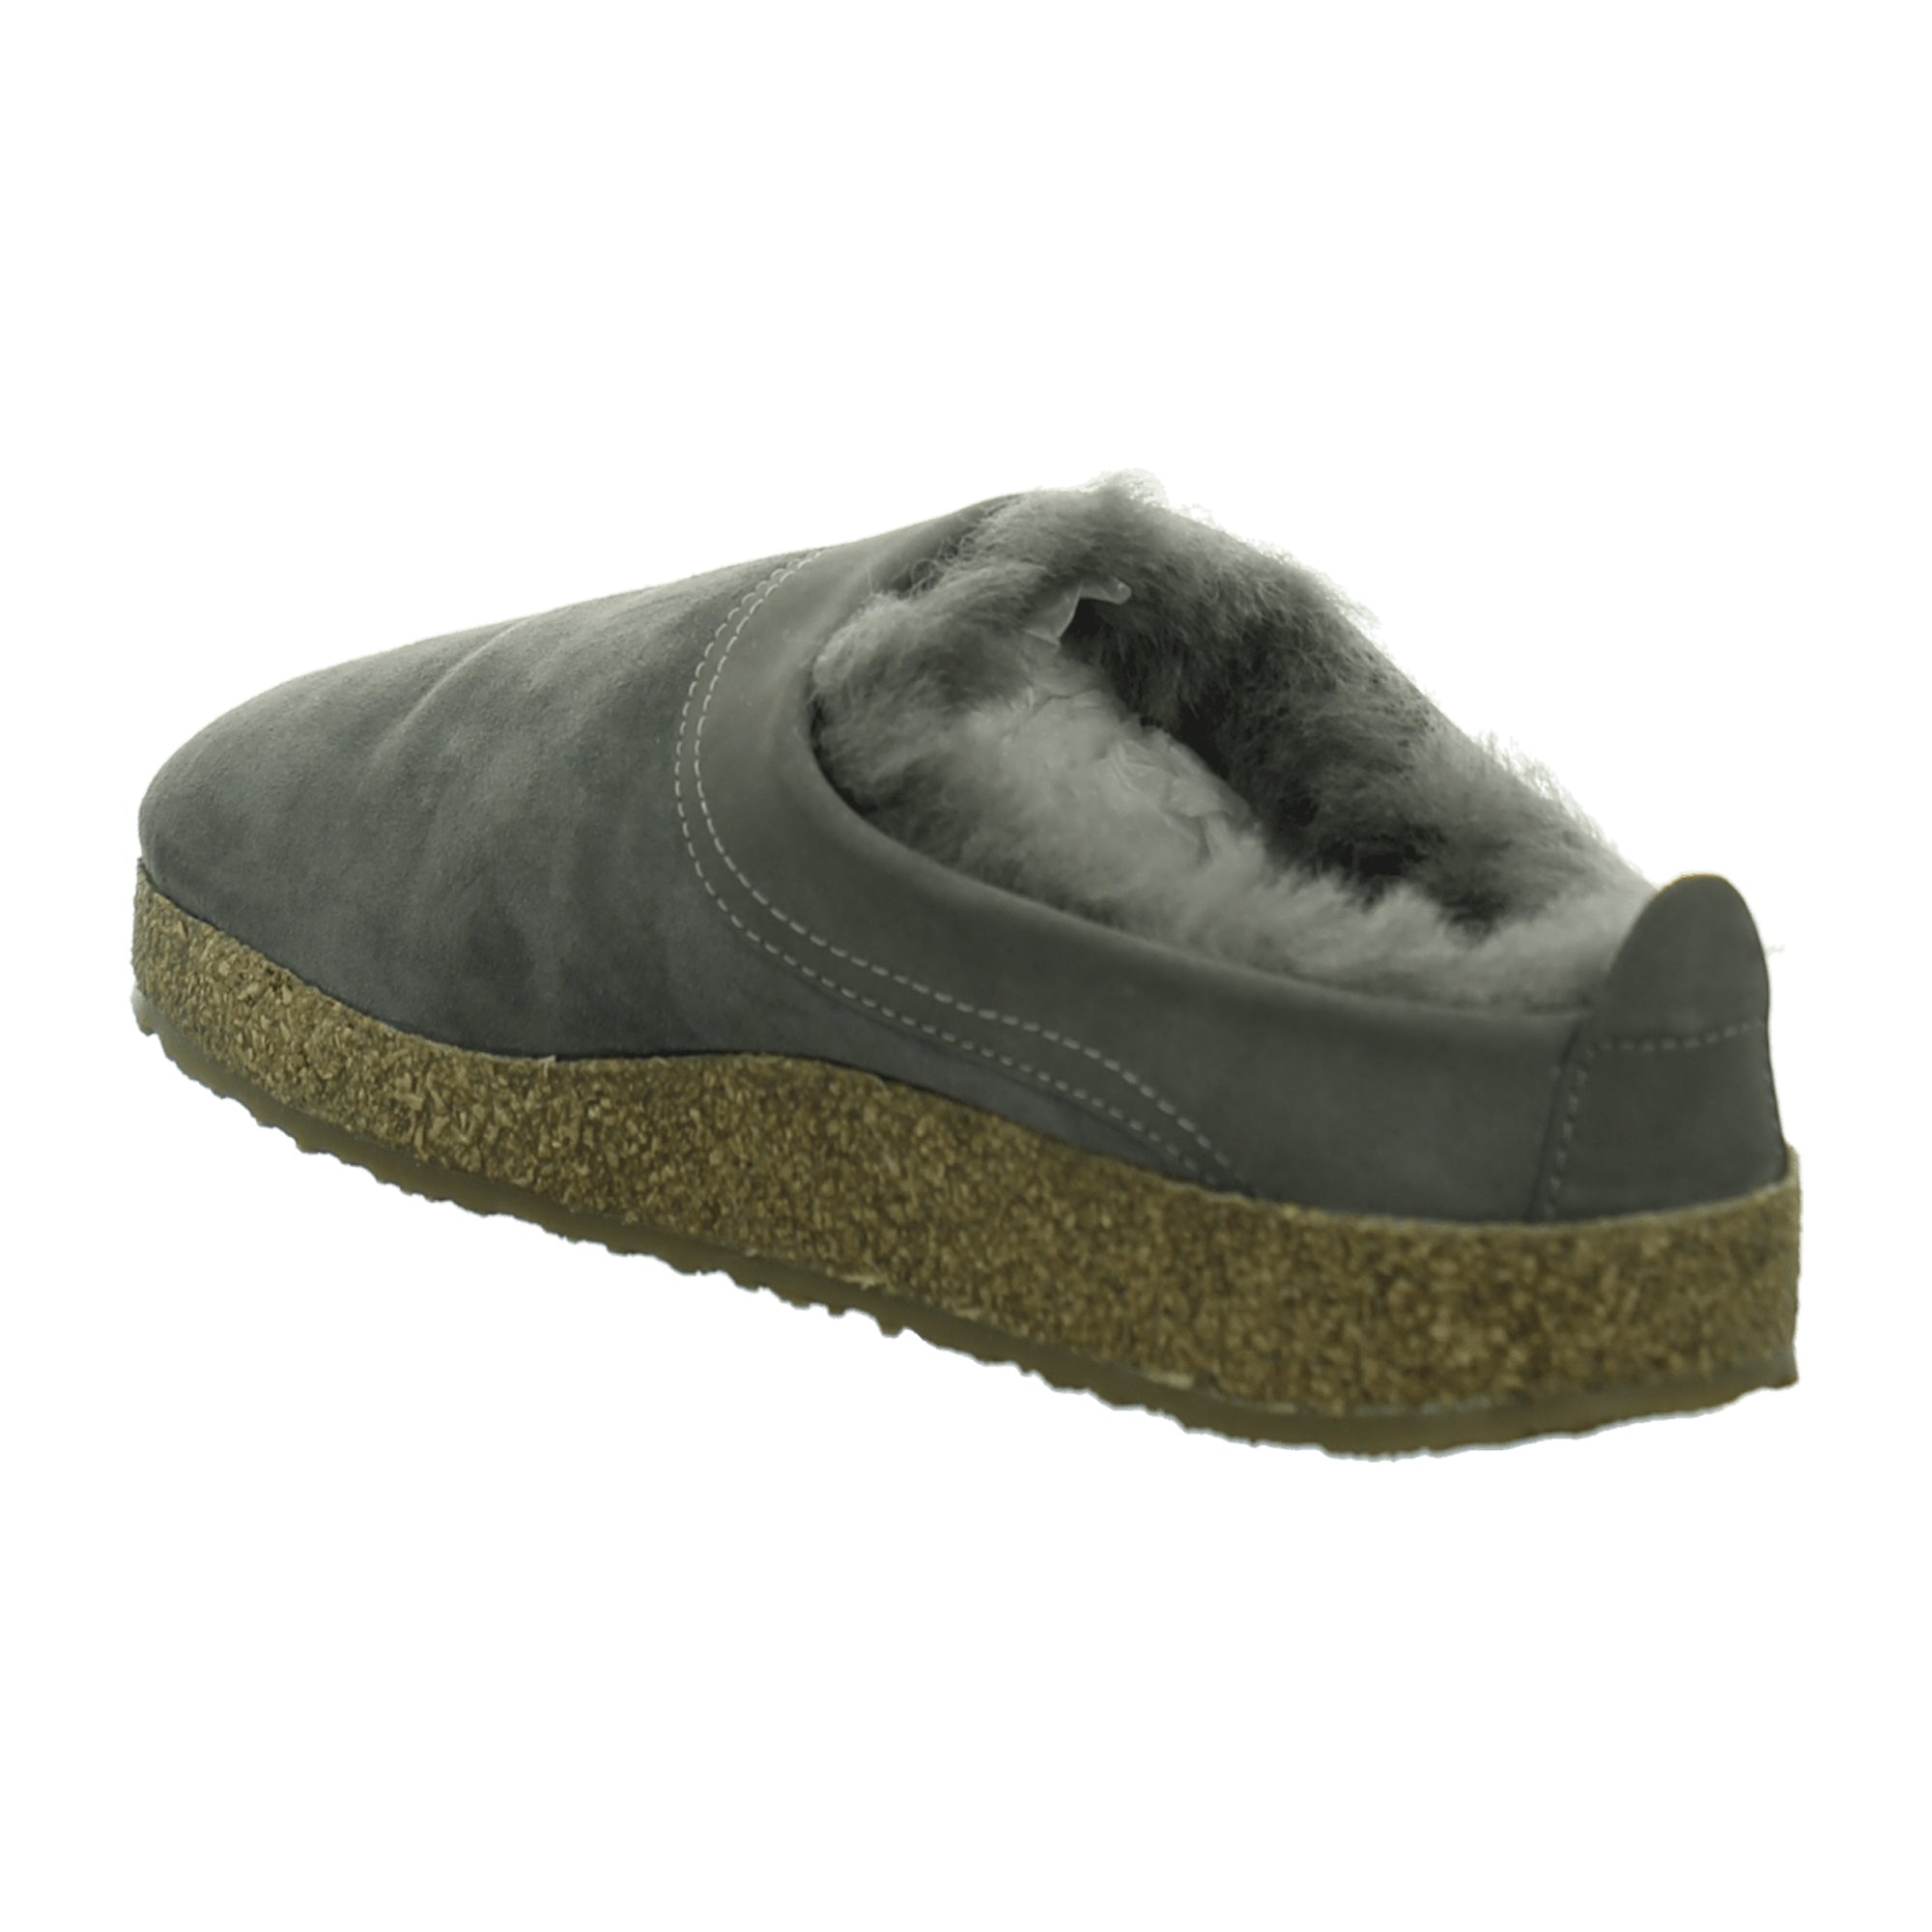 Haflinger Snowbird Women's Sheepskin Clogs - Anthracite Grey, Luxurious Comfort for Indoor and Outdoor Use